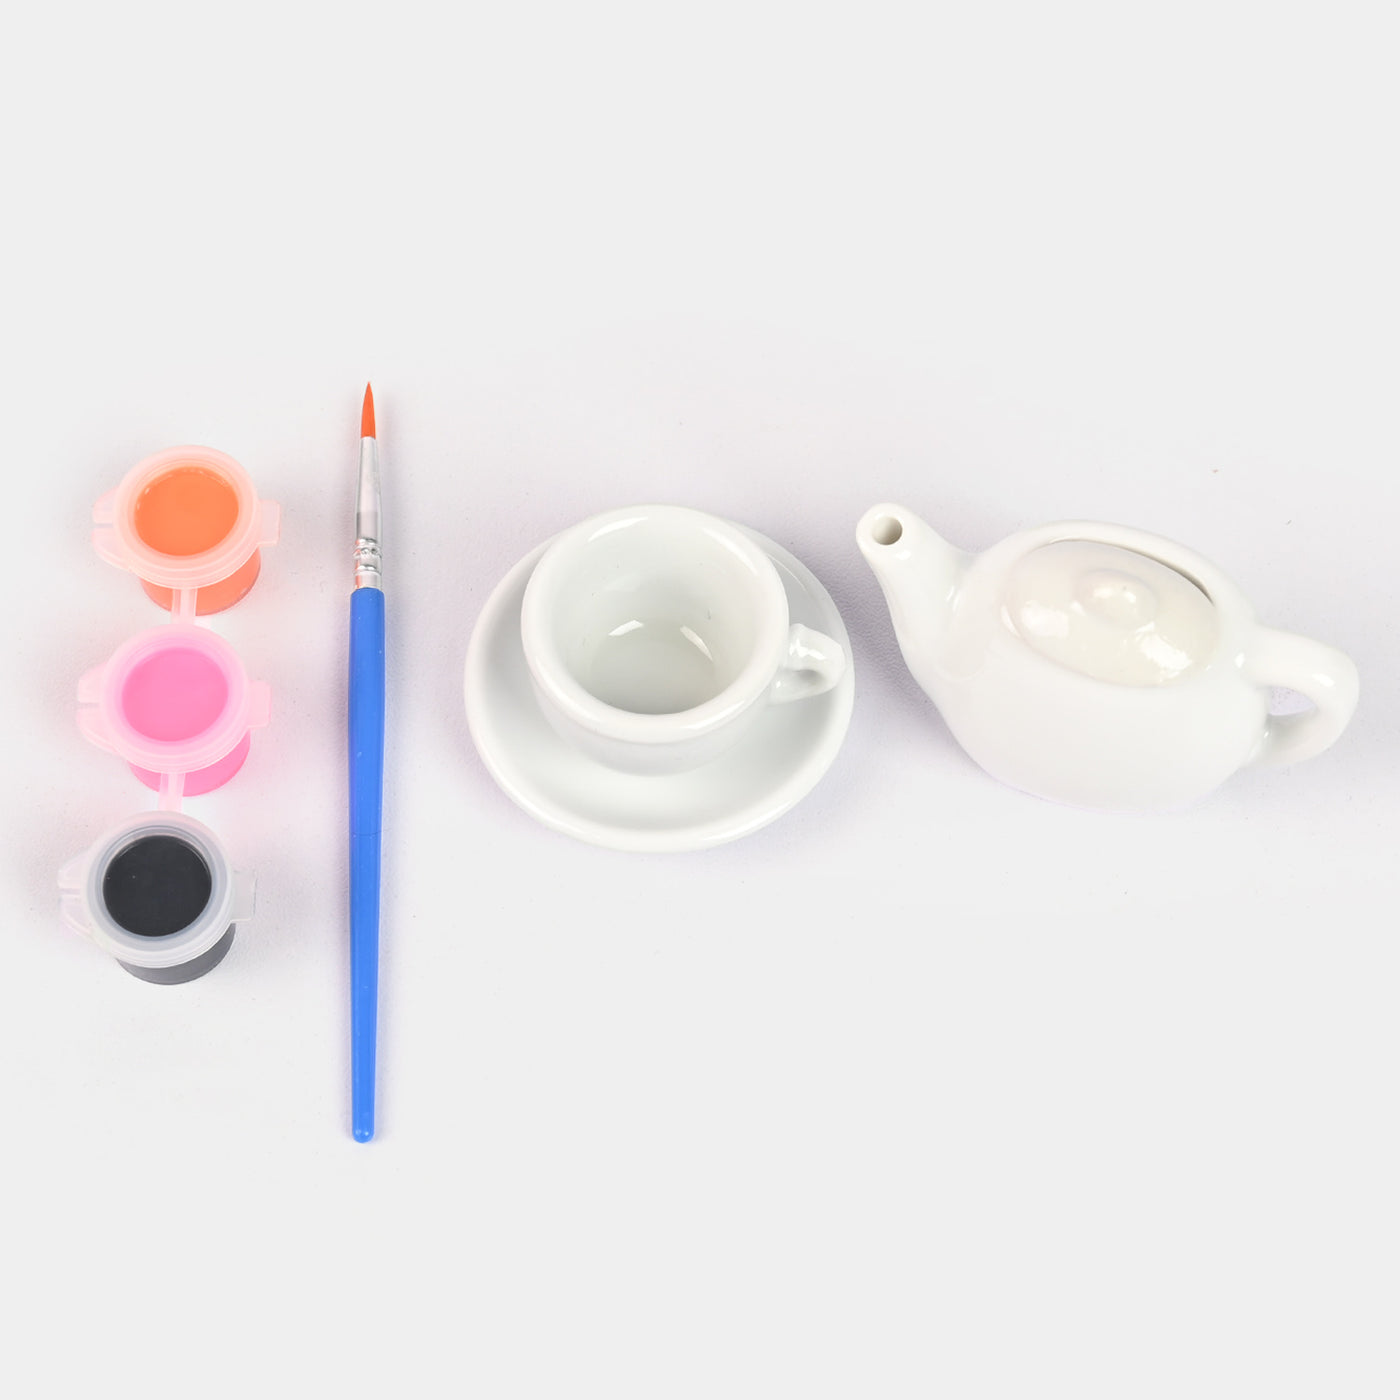 Painting Tea Set For Kids